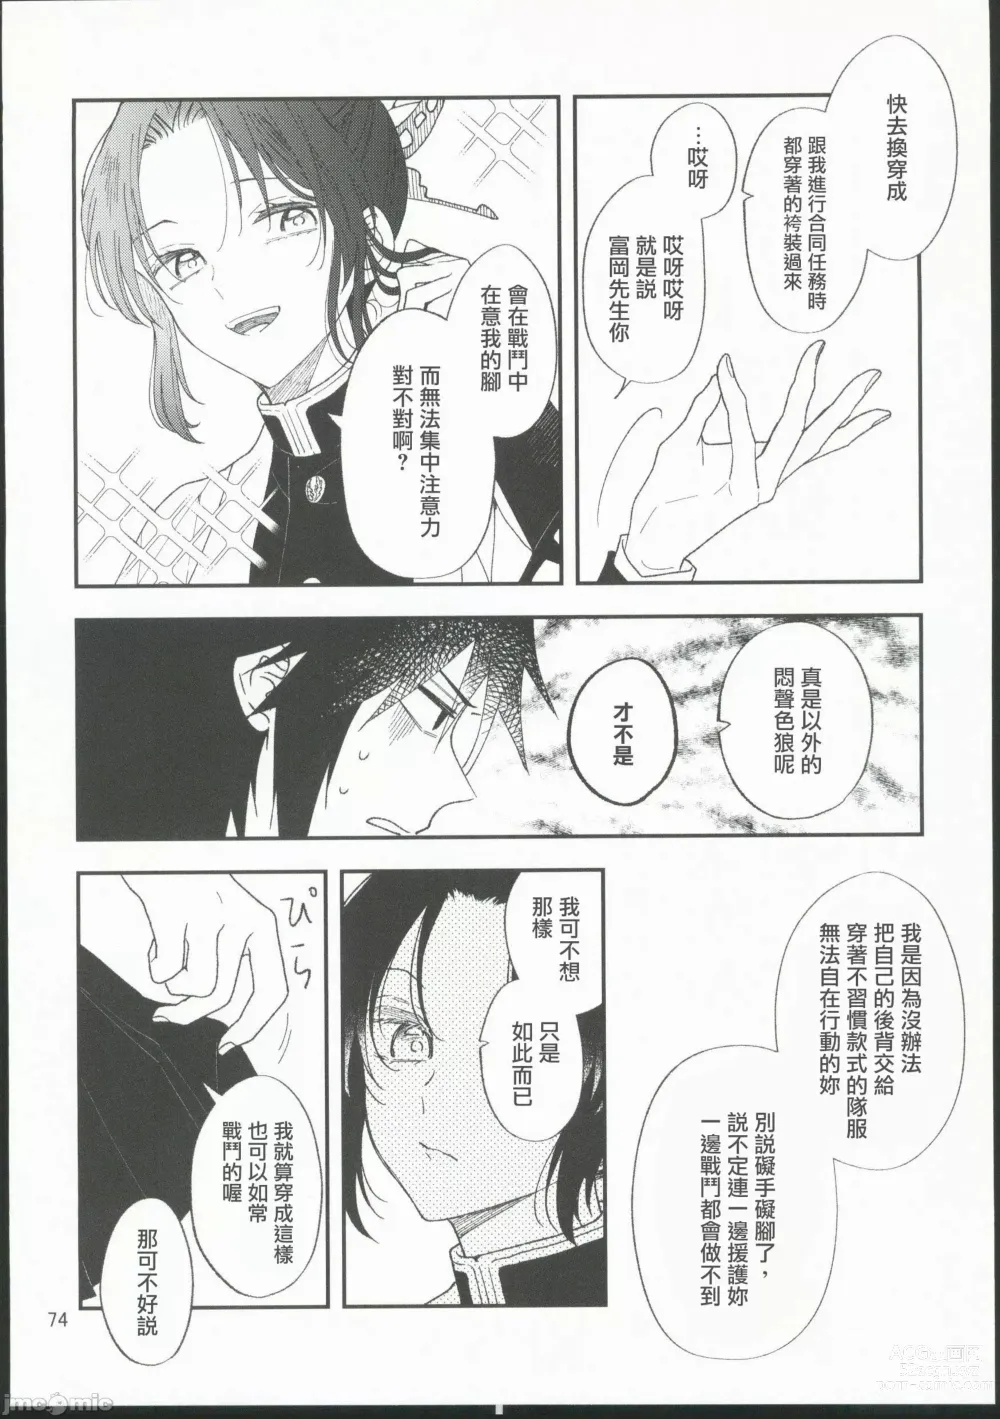 Page 73 of doujinshi Koi Tsumugi